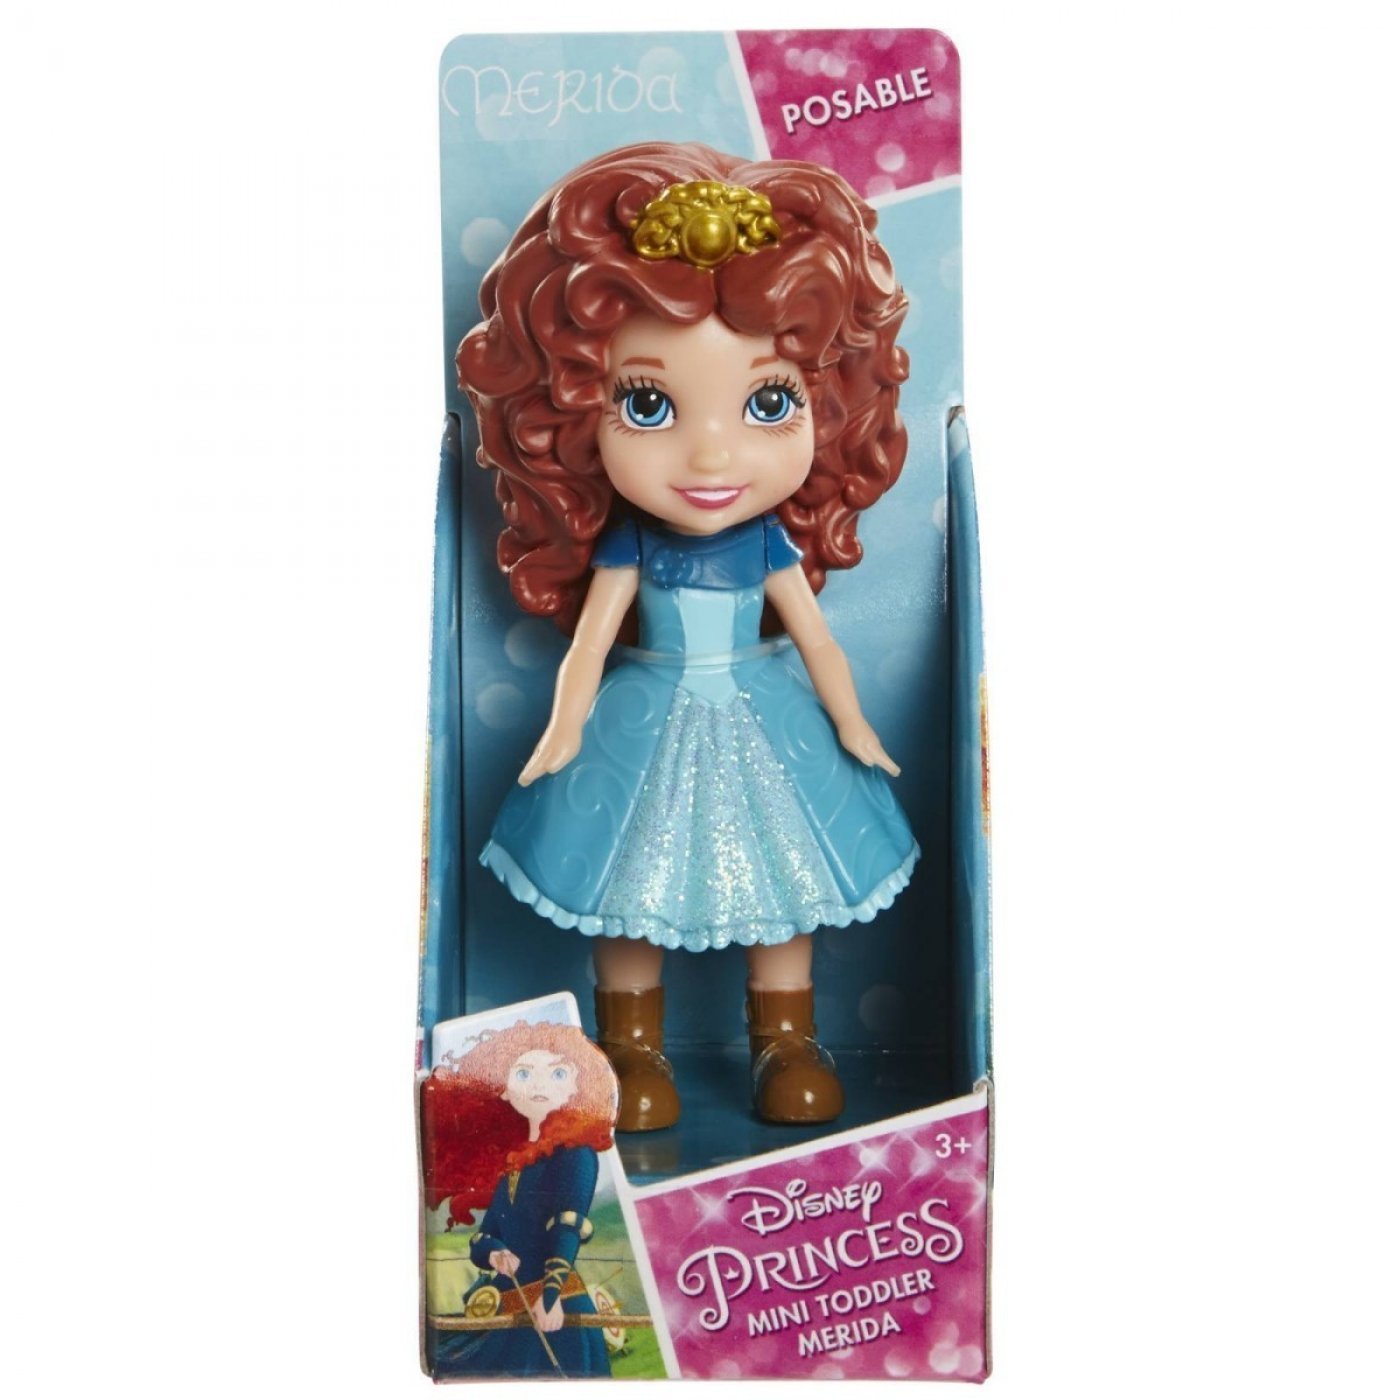 Disney Princess mini toddler Merida